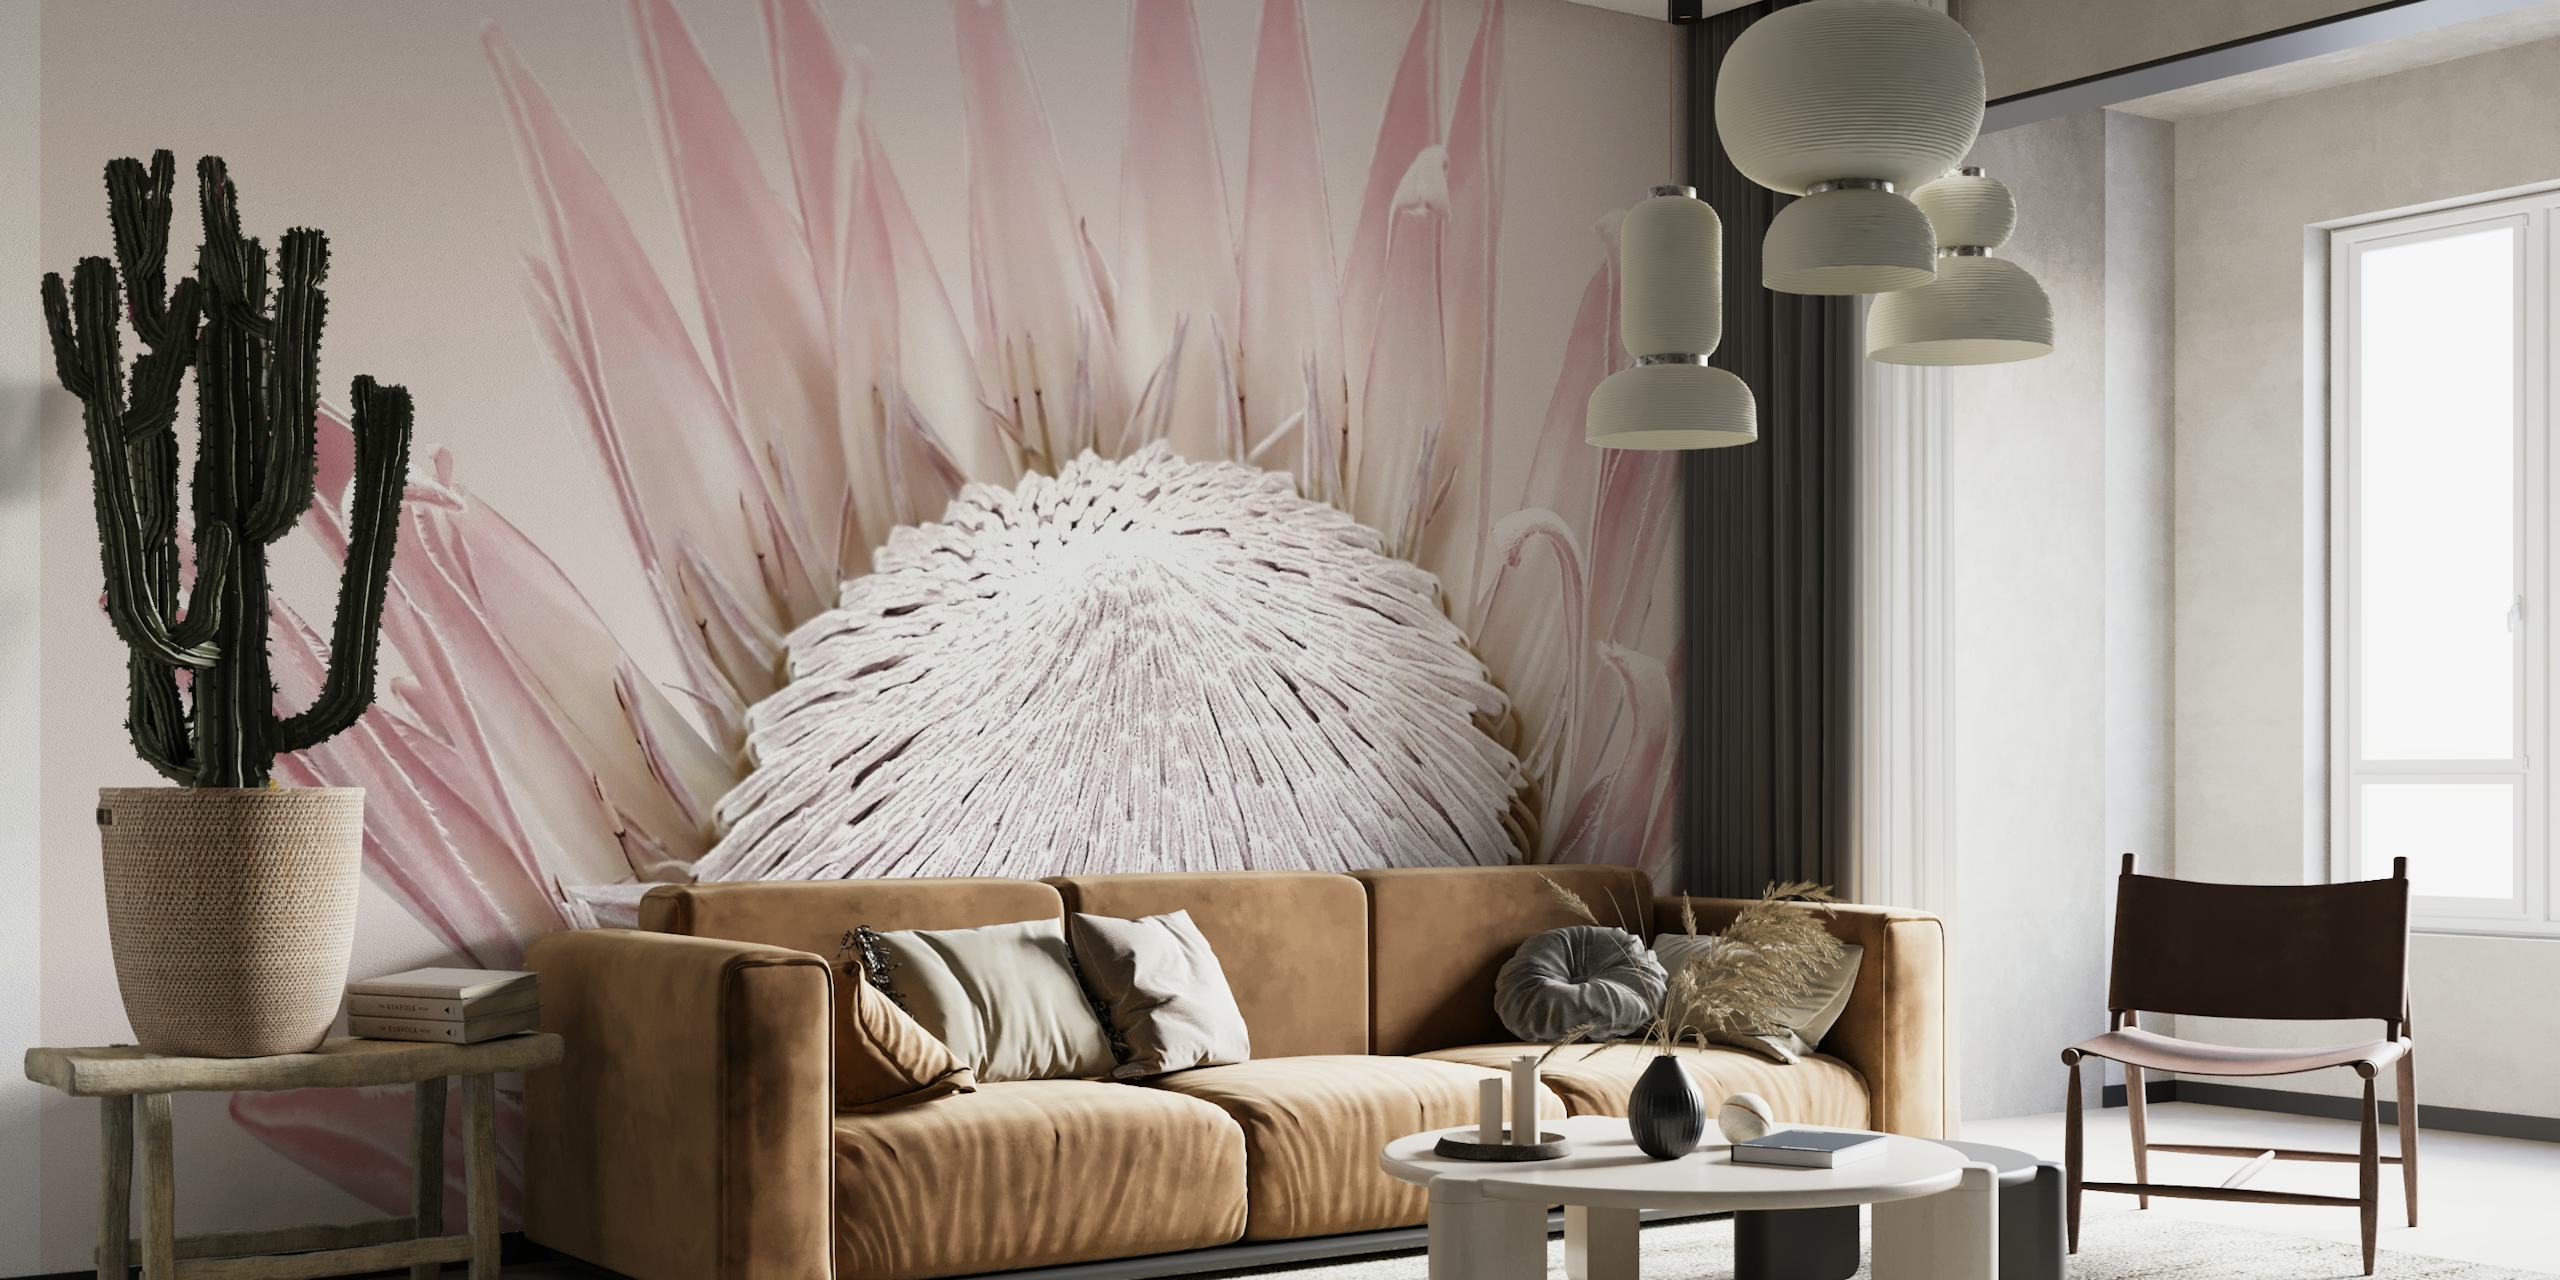 Pink King Protea Flower wallpaper